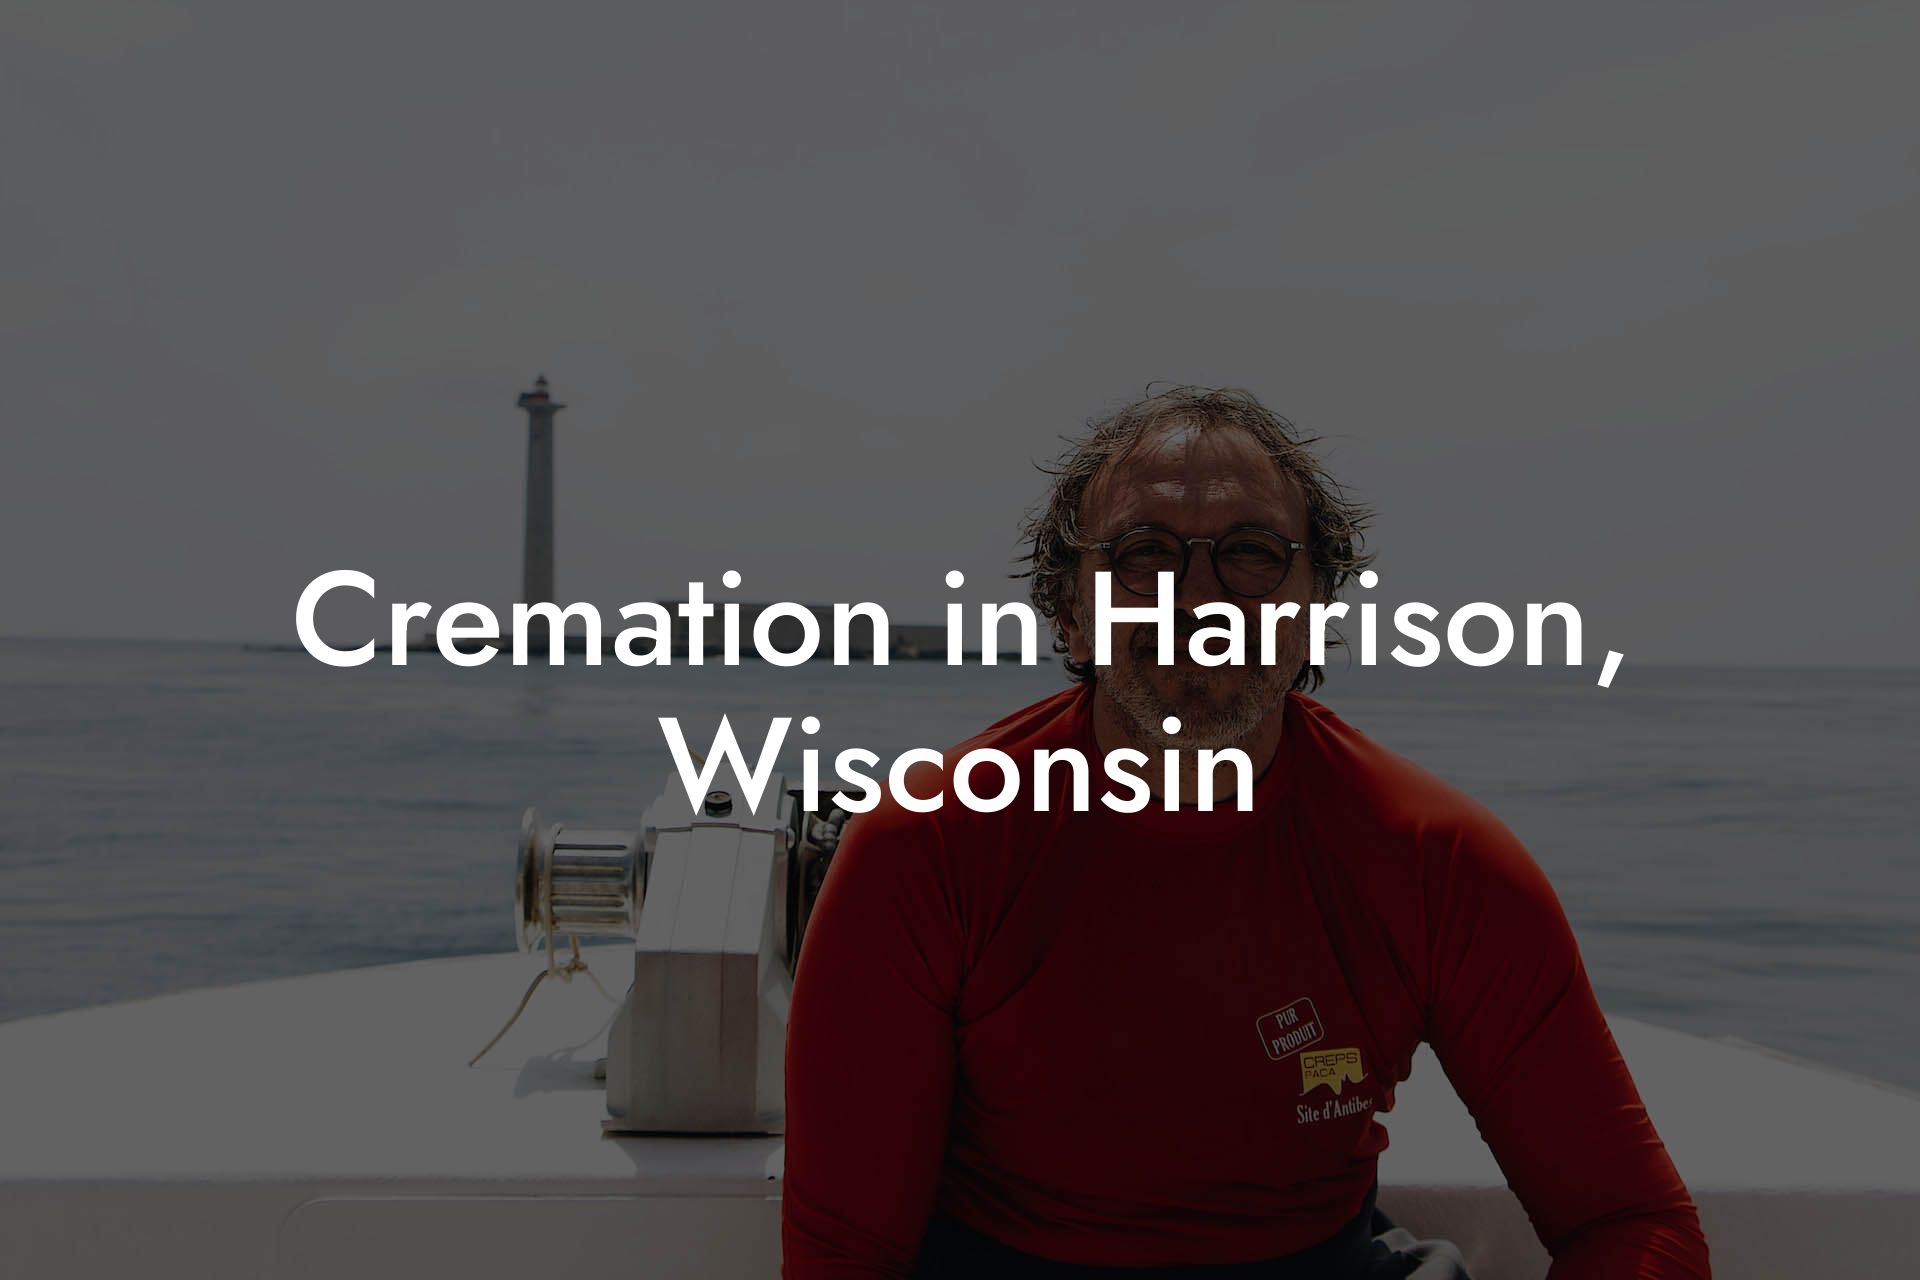 Cremation in Harrison, Wisconsin